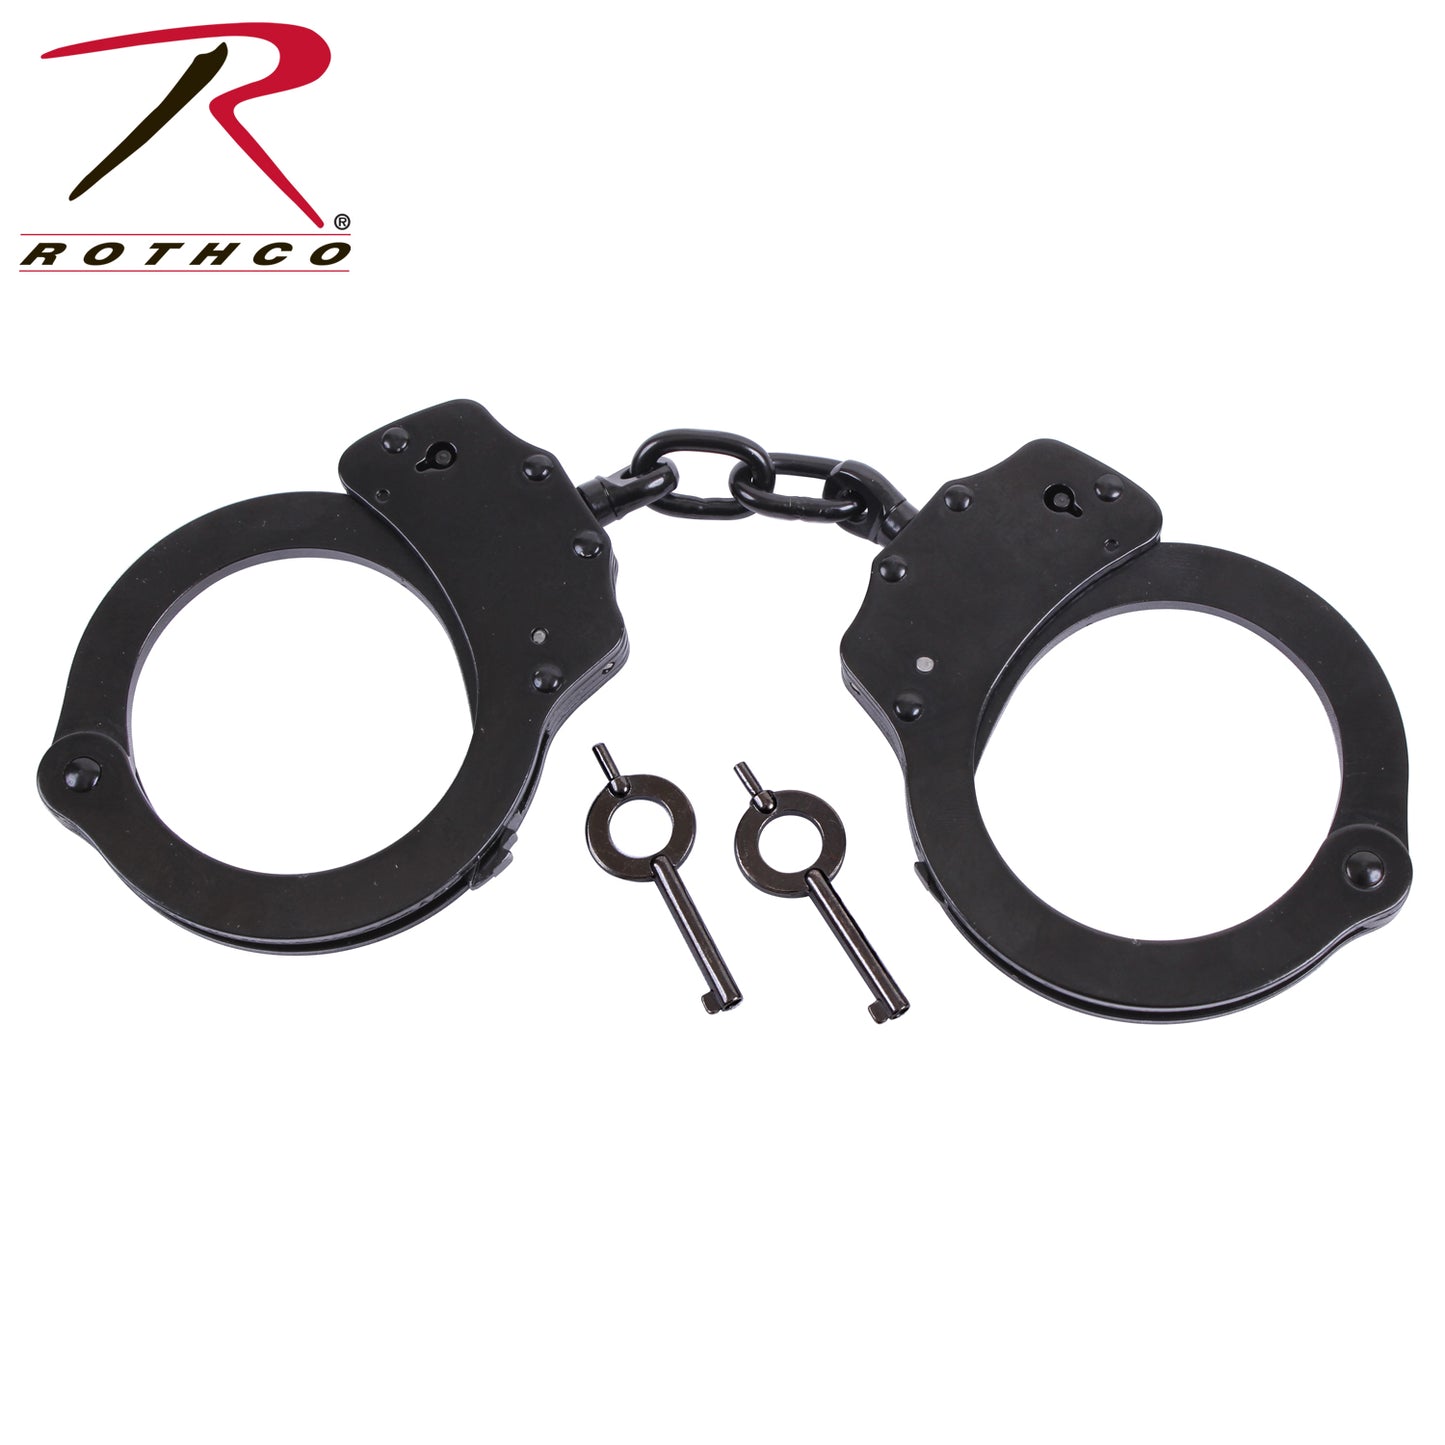 Stainless Steel Handcuffs